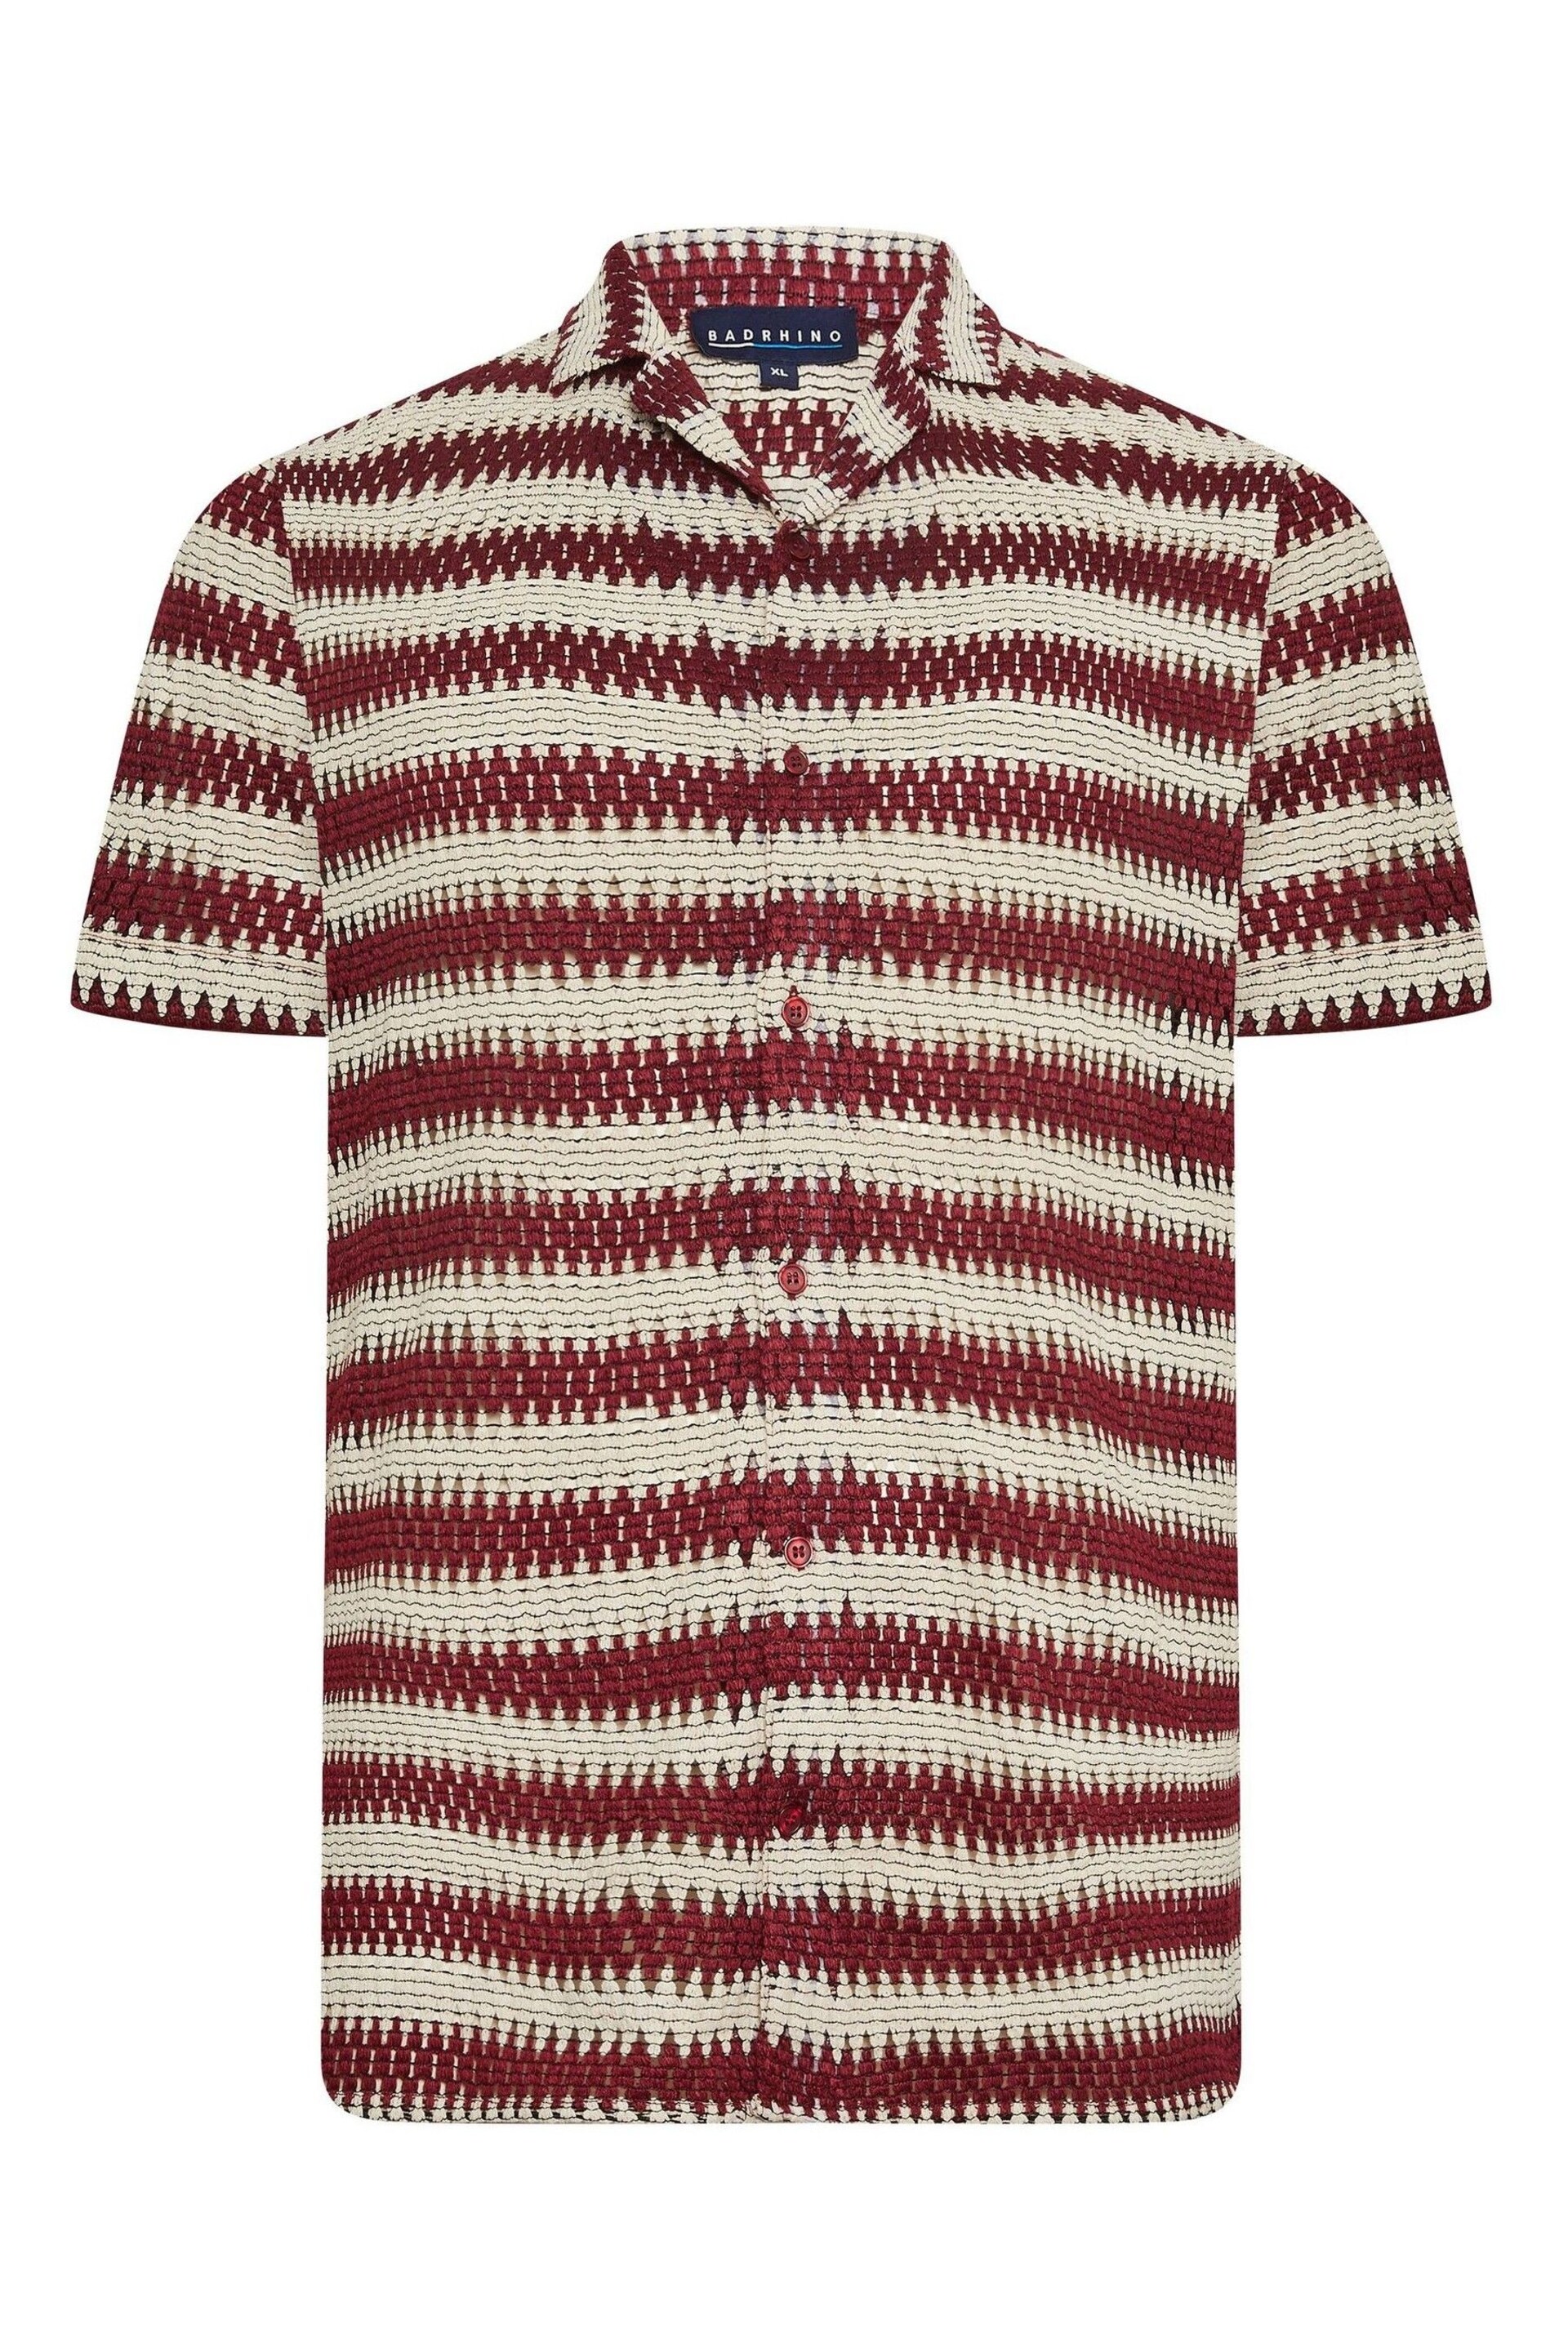 BadRhino Big & Tall Red Textured Crochet Short Sleeve Shirt - Image 3 of 4